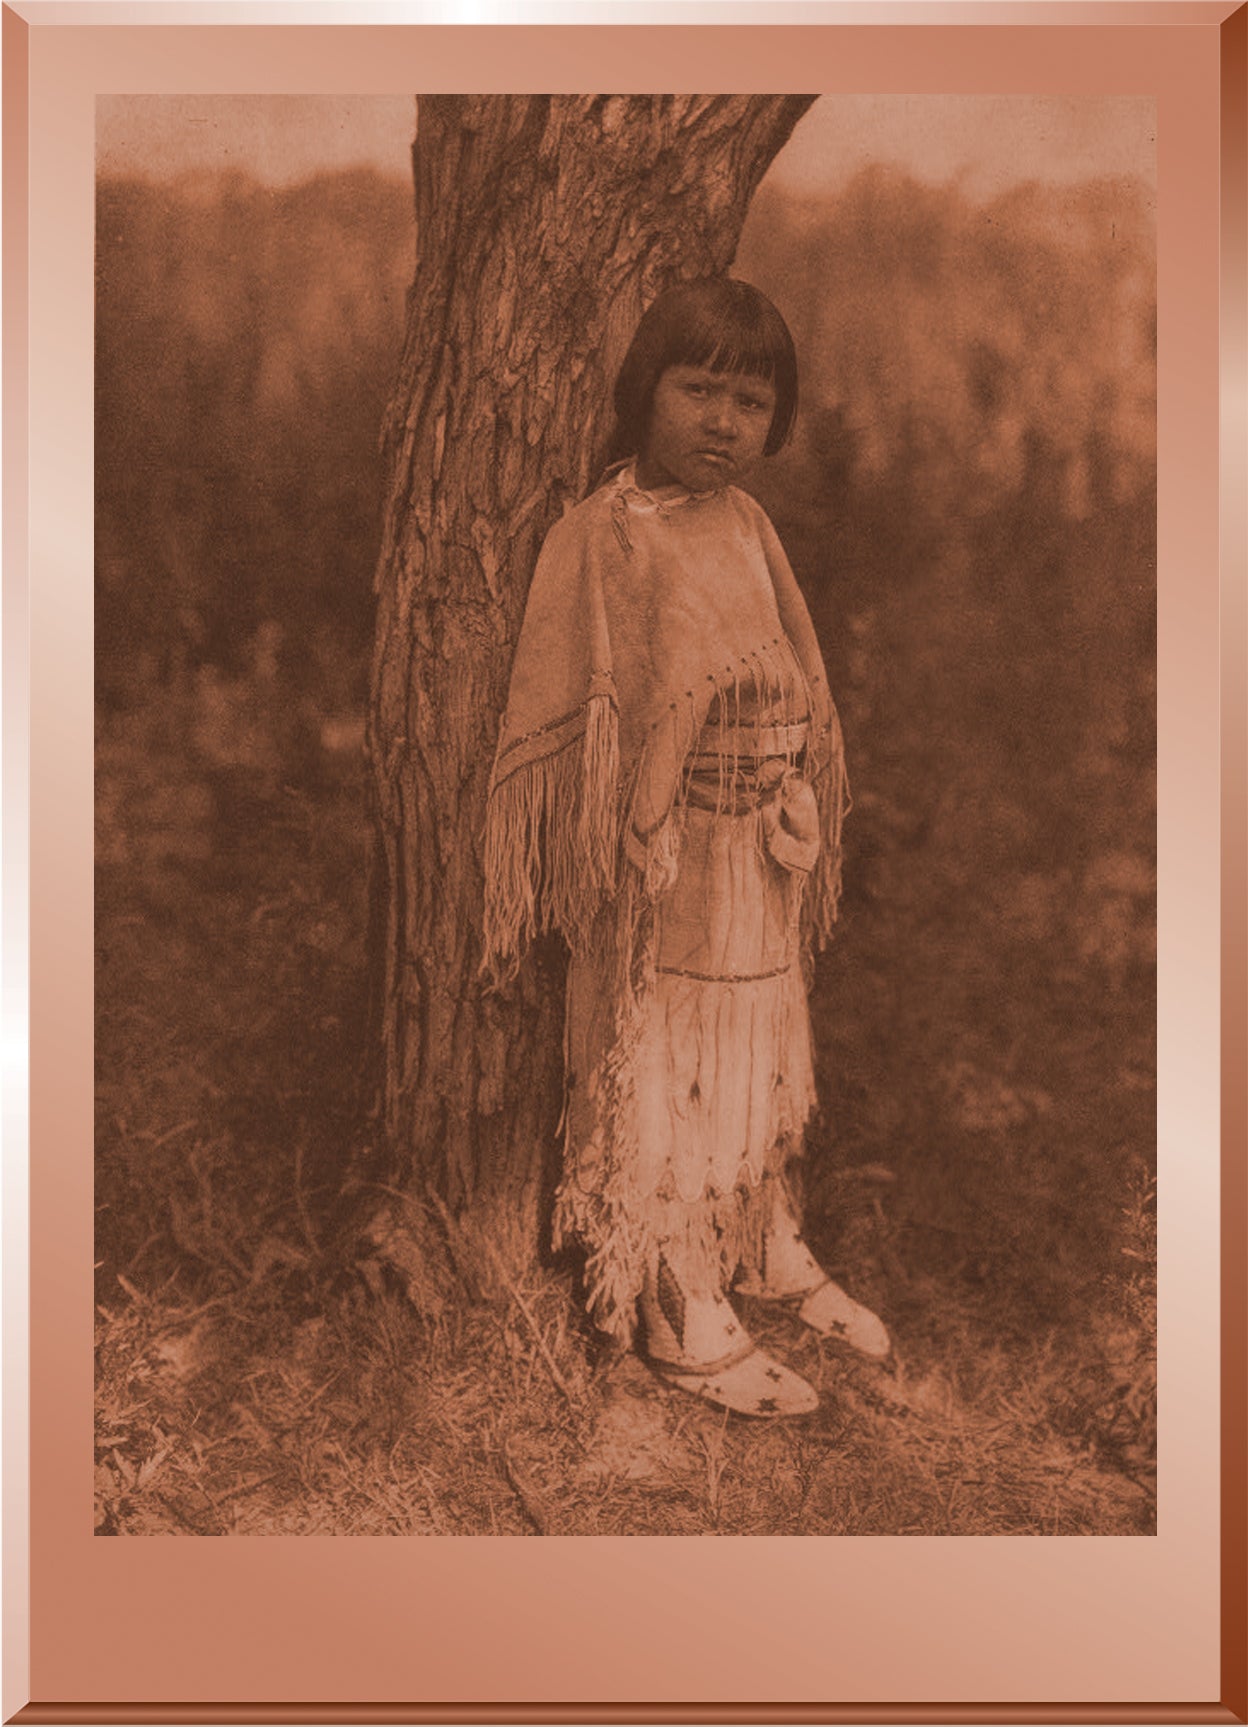 Cheyenne Child